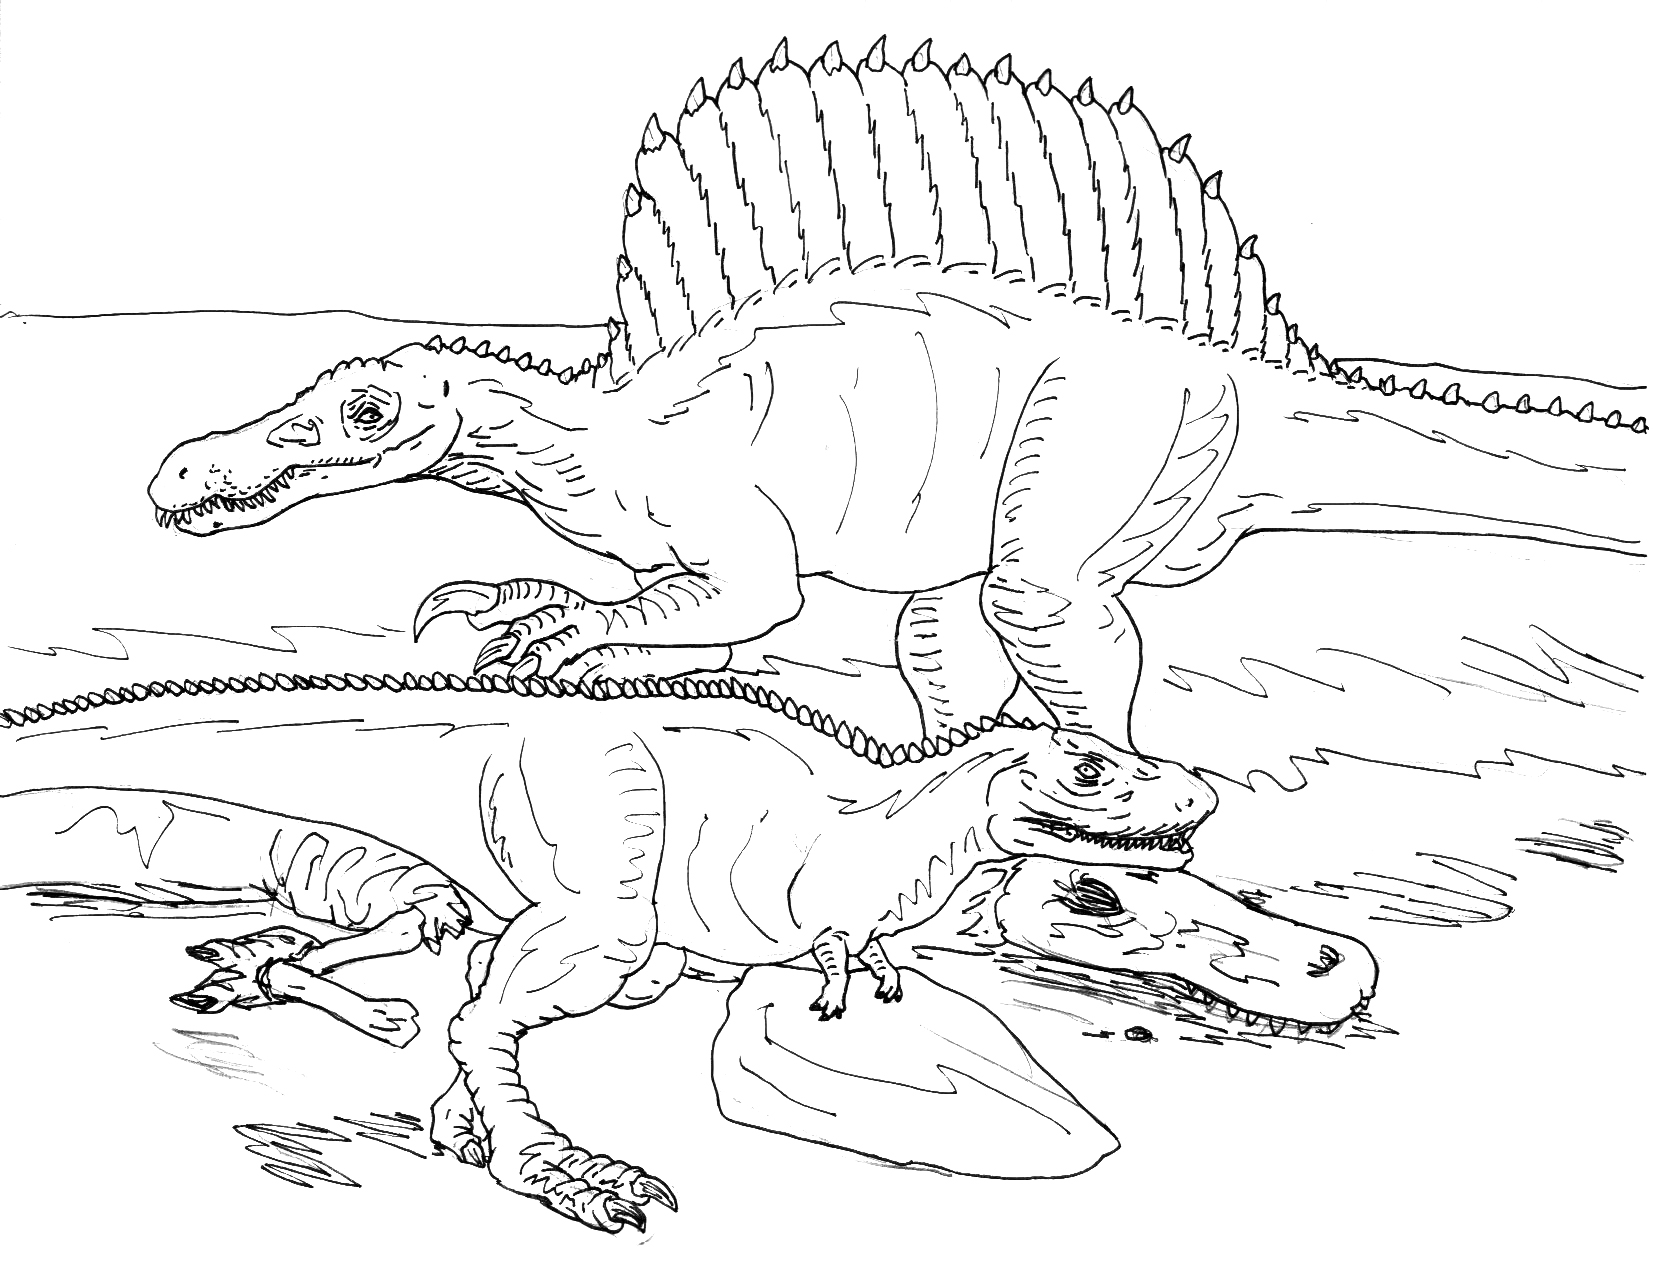 Spinosaurus vs rugops bw by avancna on